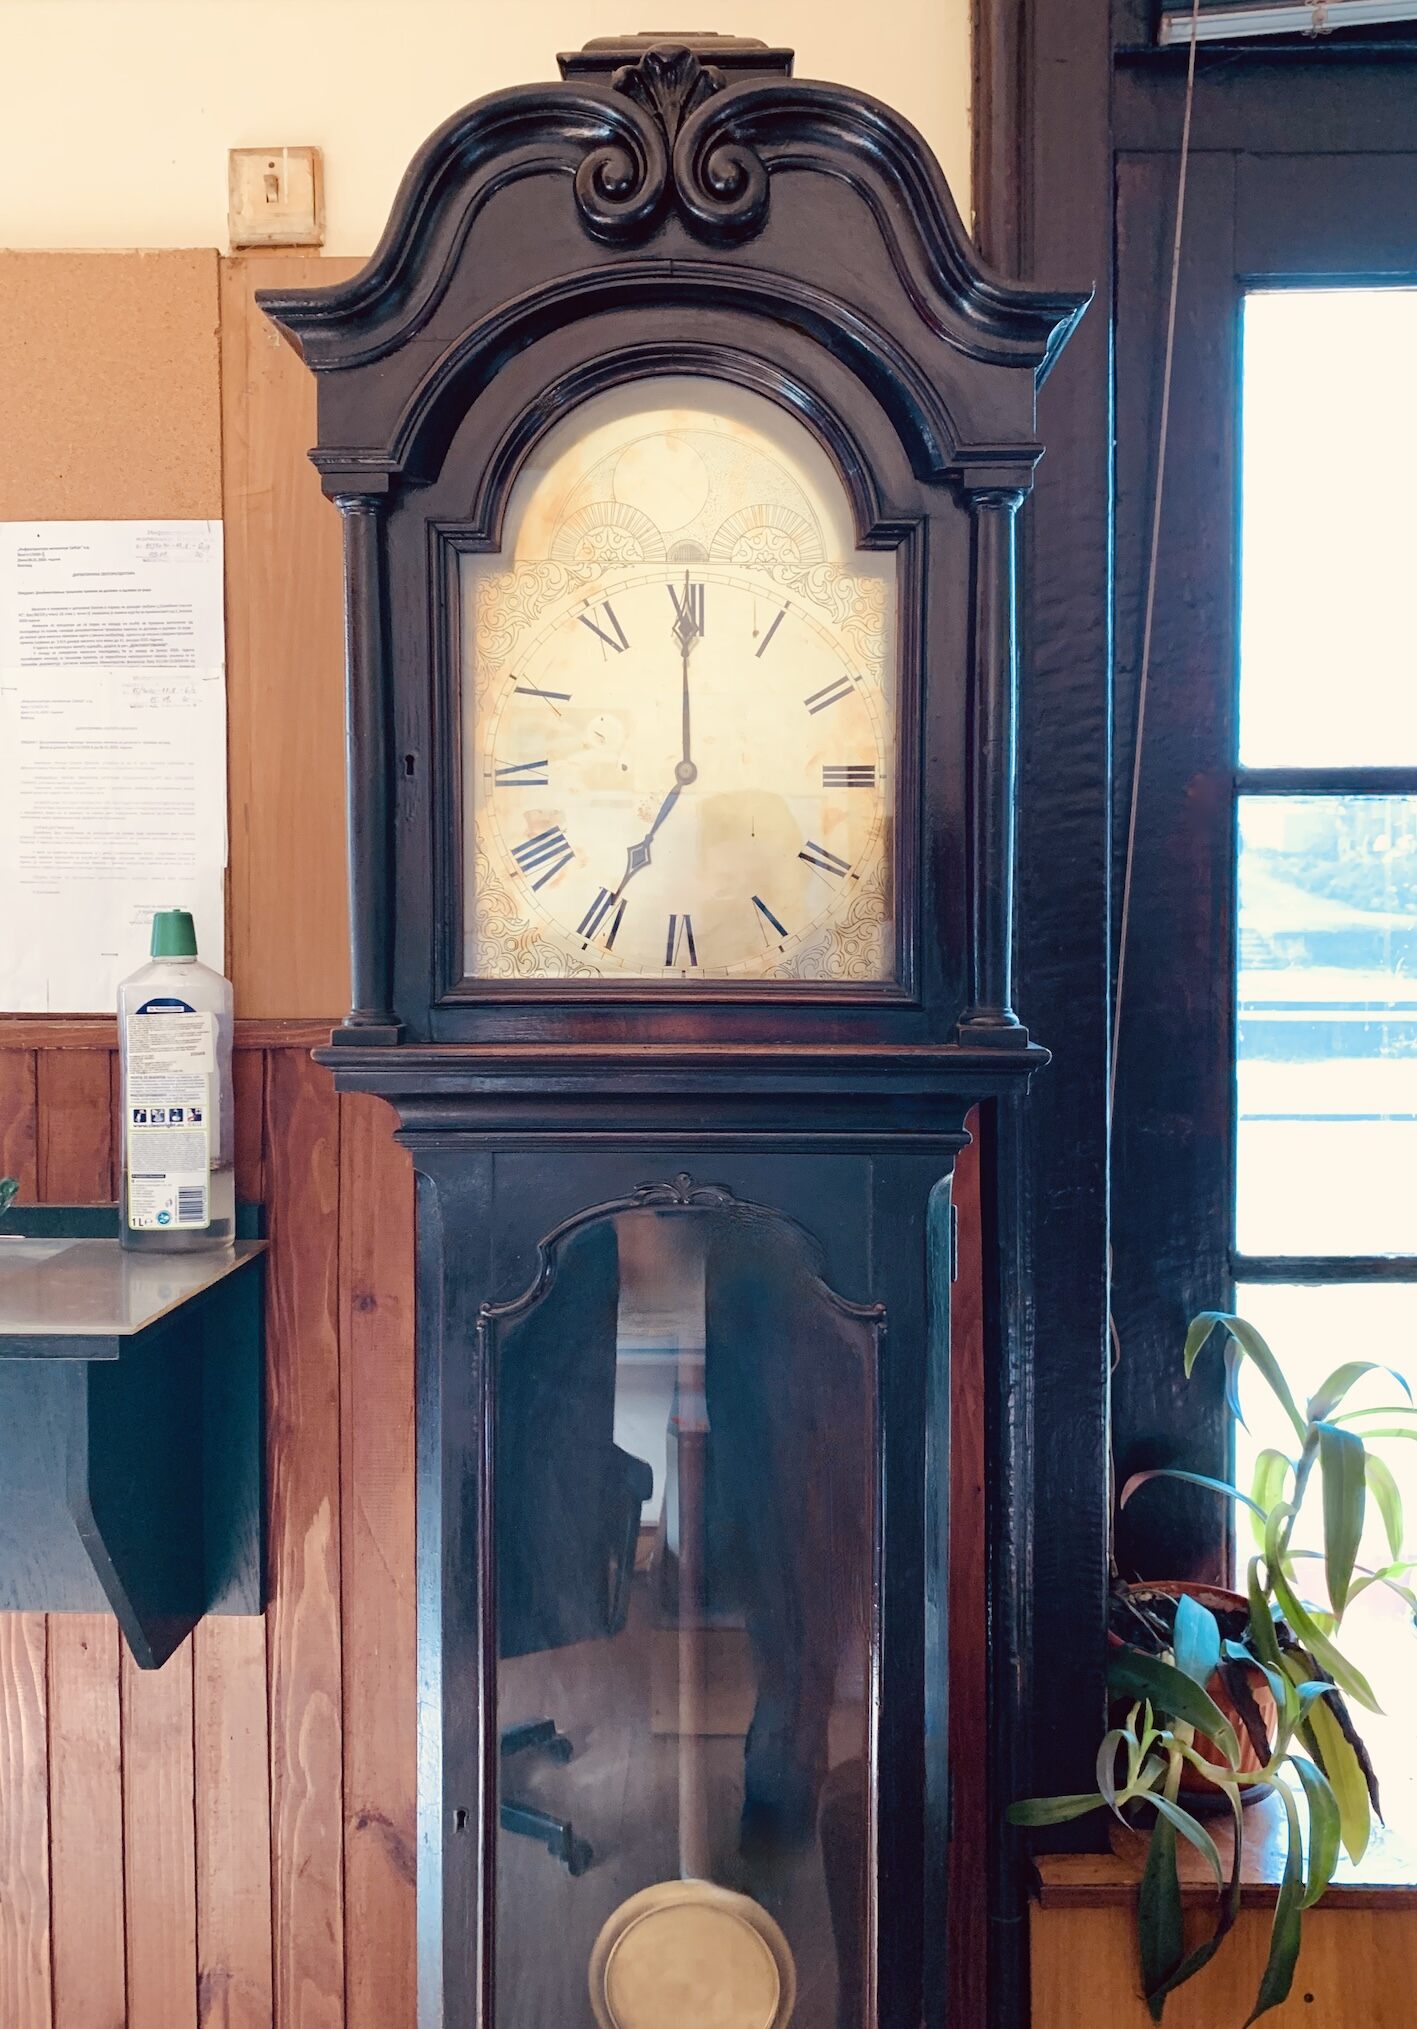 The famous clock given to Aleksandar Obrenovic by Draga Masin